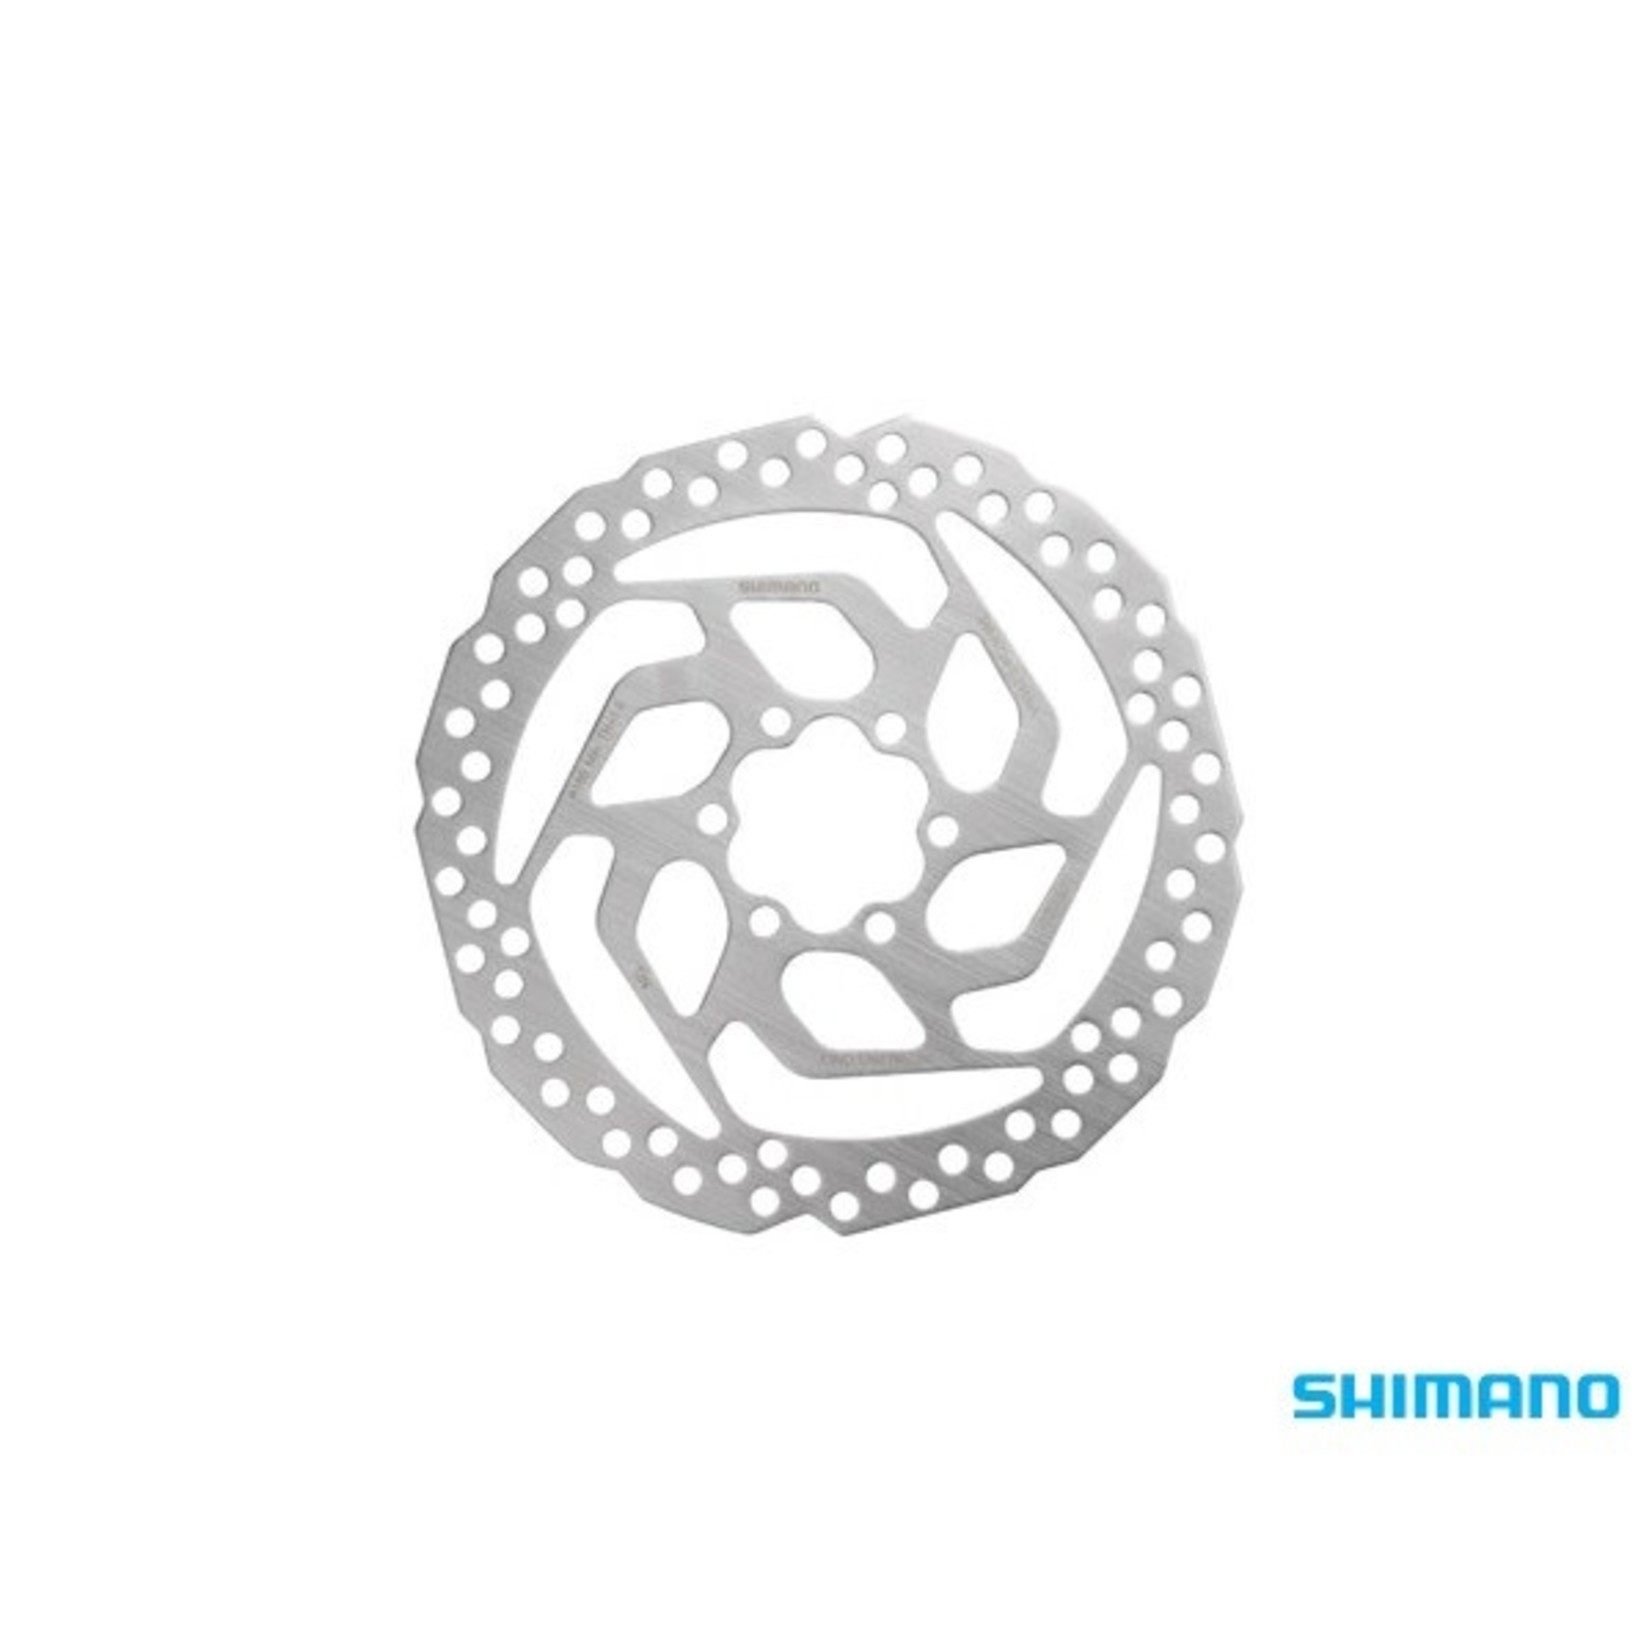 SHIMANO SHIMANO SM-RT26 DISC ROTOR 160mm 6-BOLT for RESIN PAD